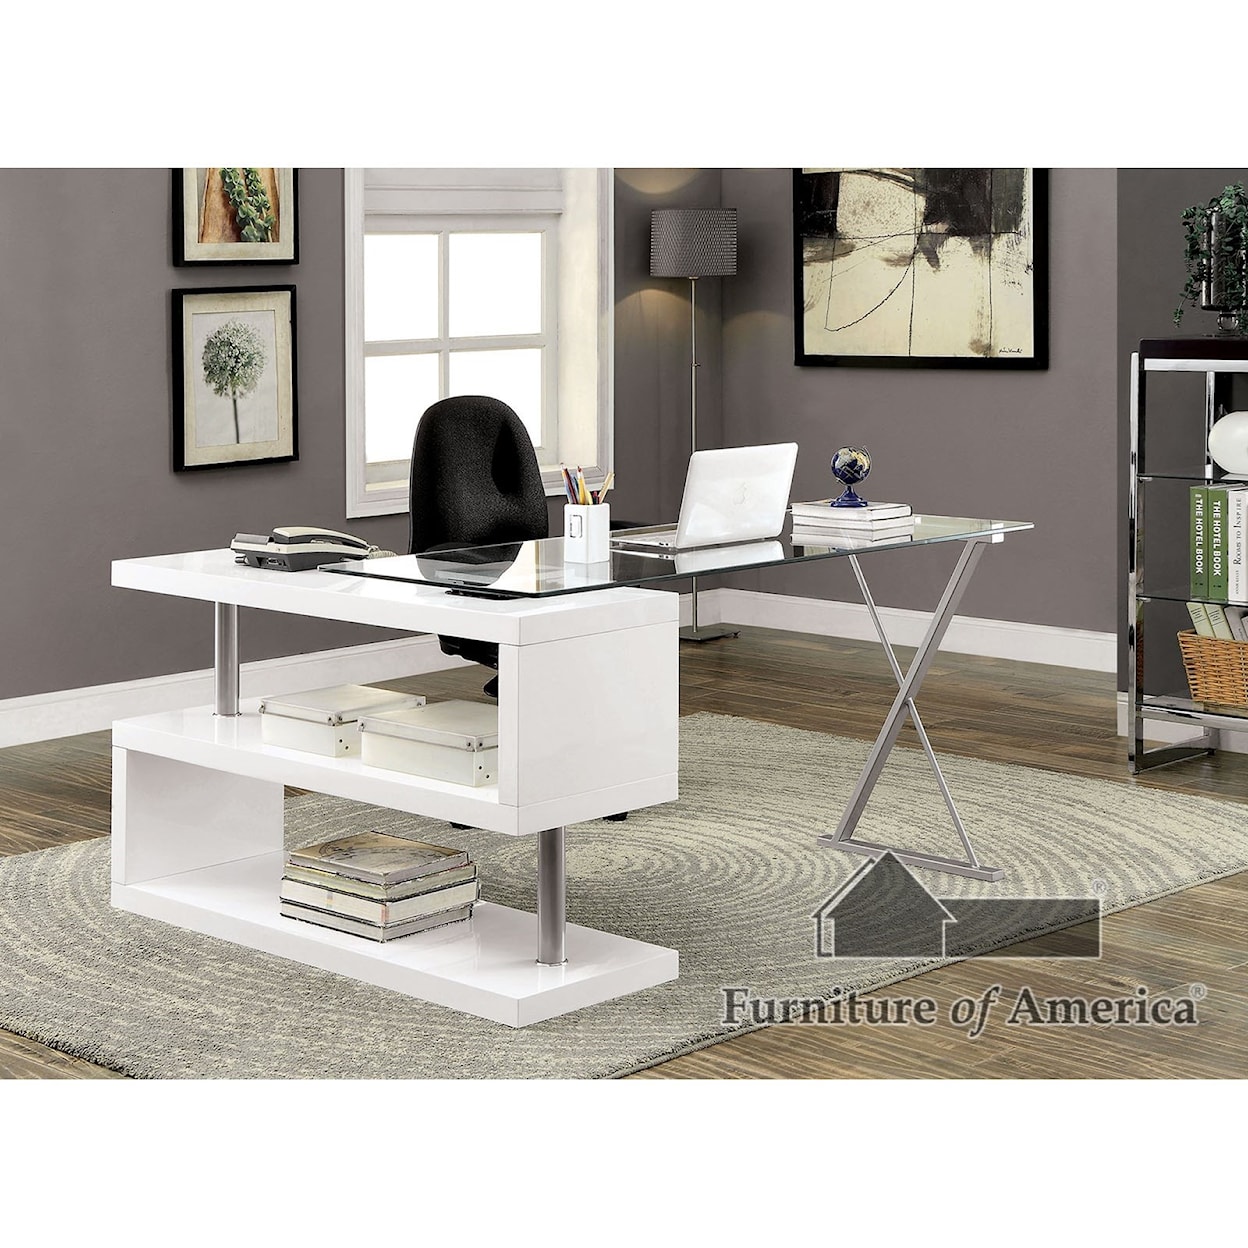 Furniture of America Bronwen Desk